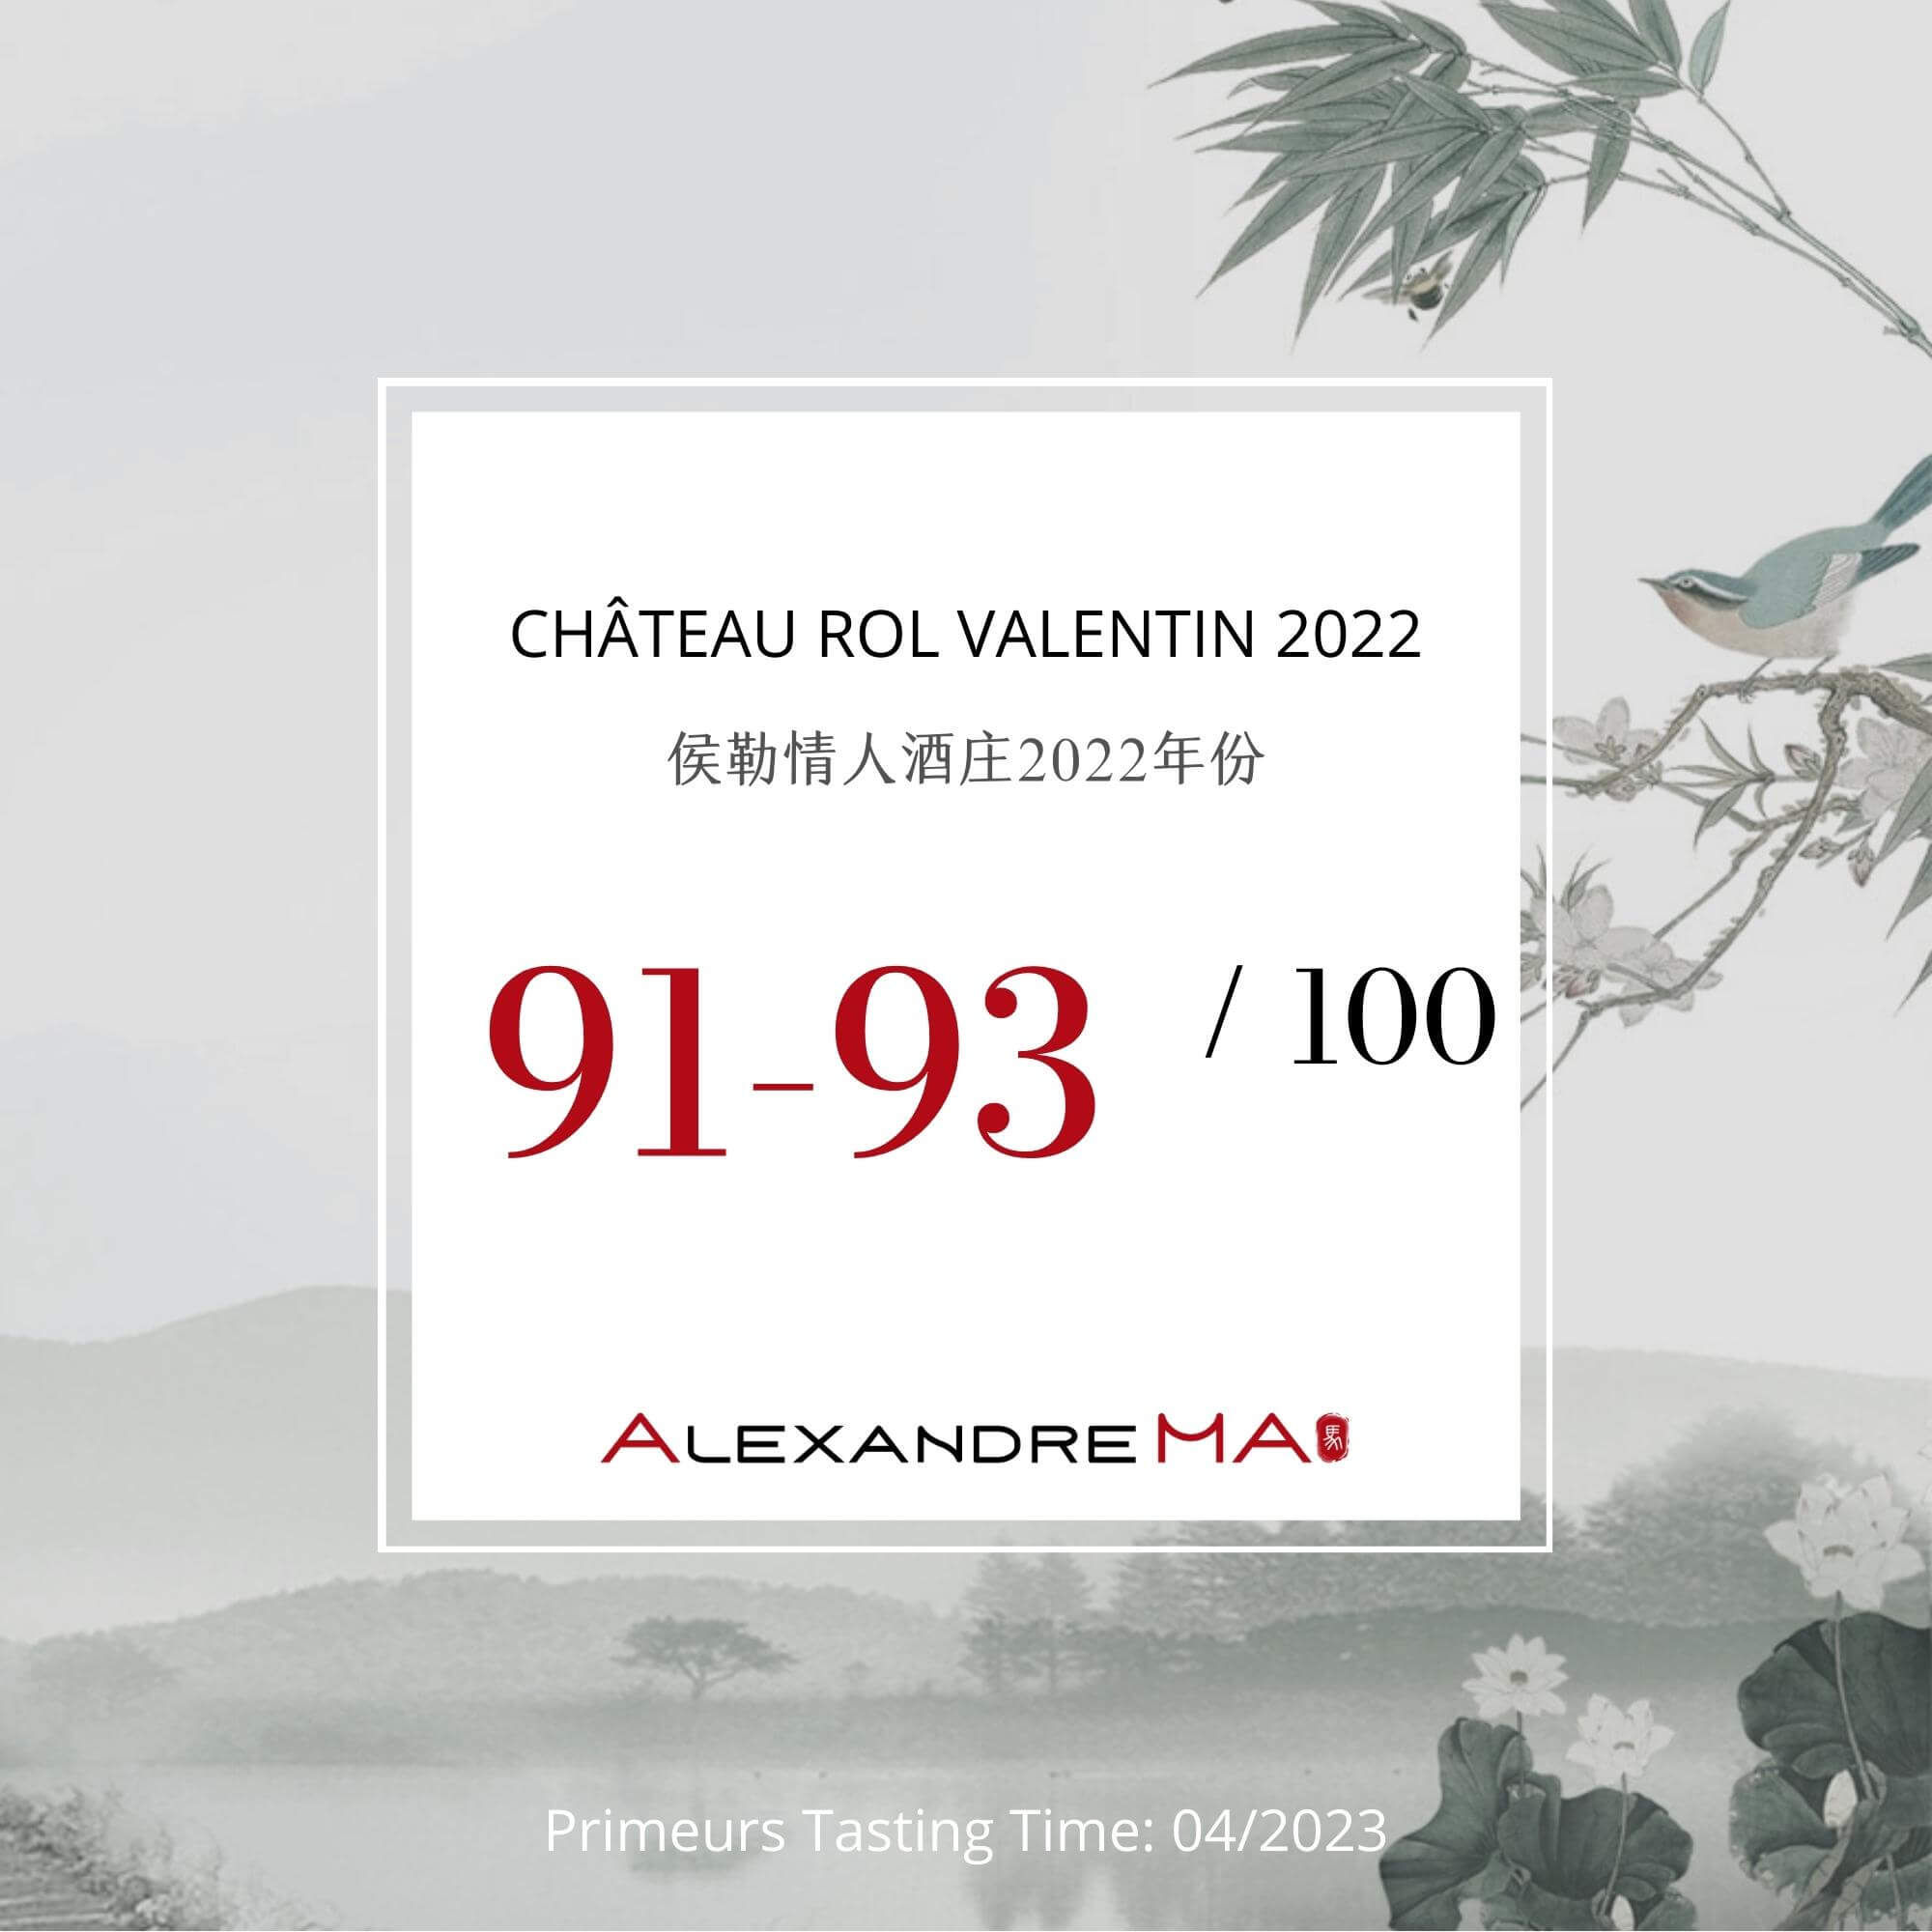 Château Rol Valentin 2022 Primeurs - Alexandre MA